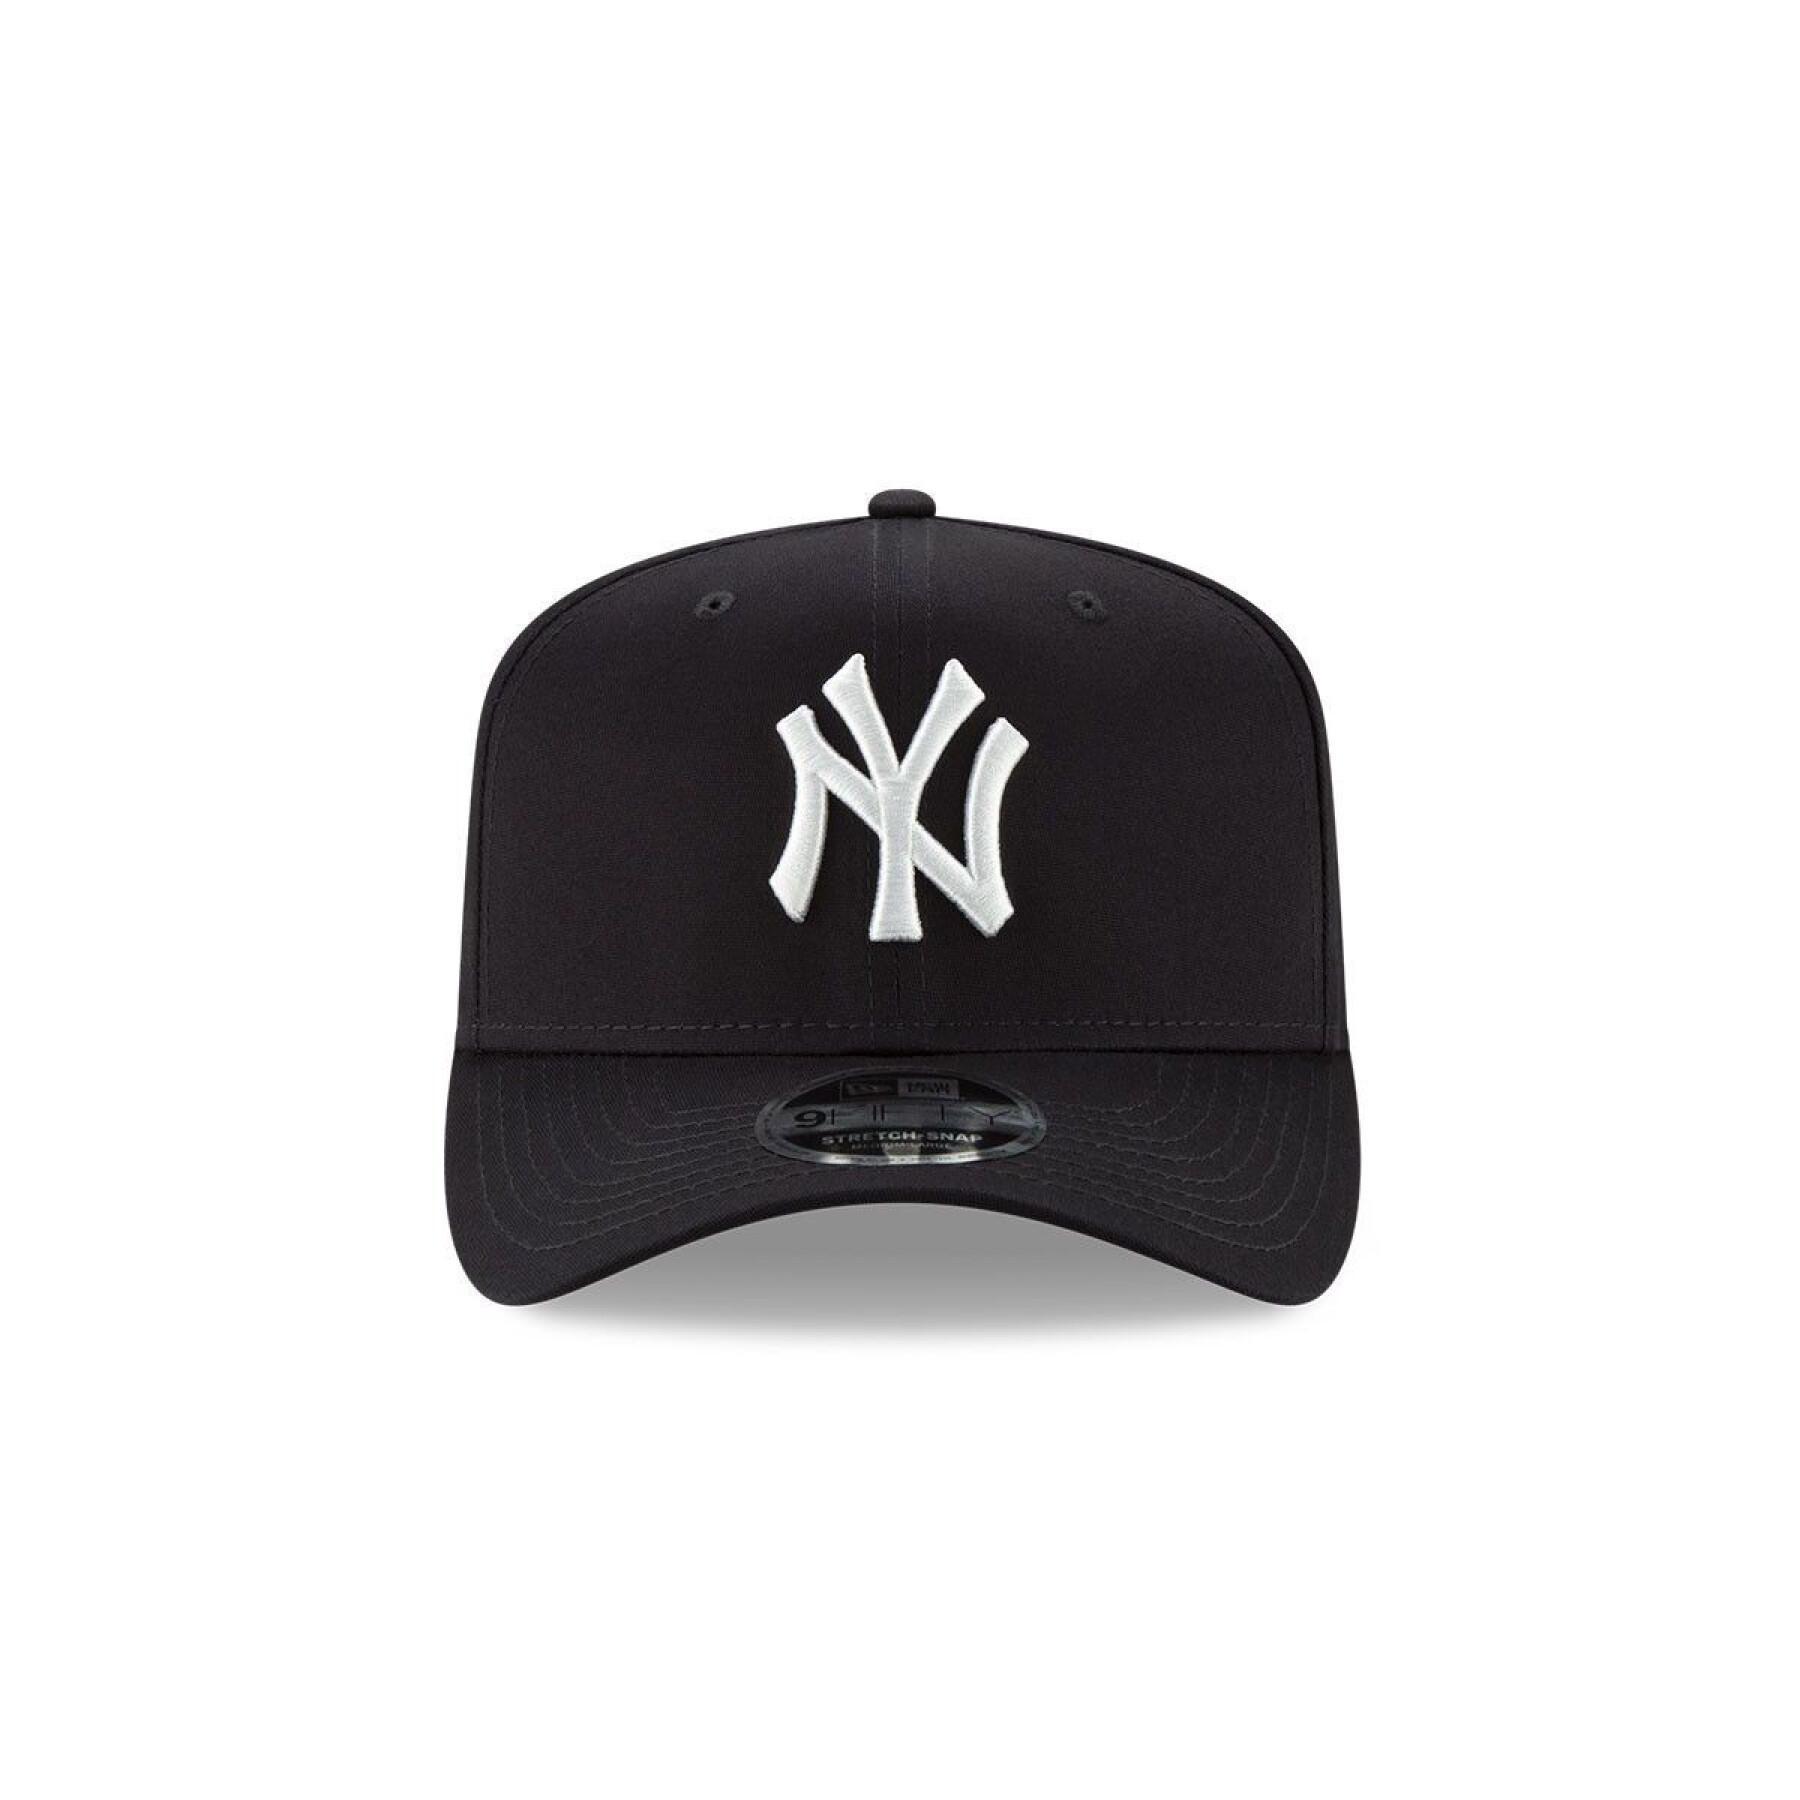 Boné New Era Stretch New York Yankees